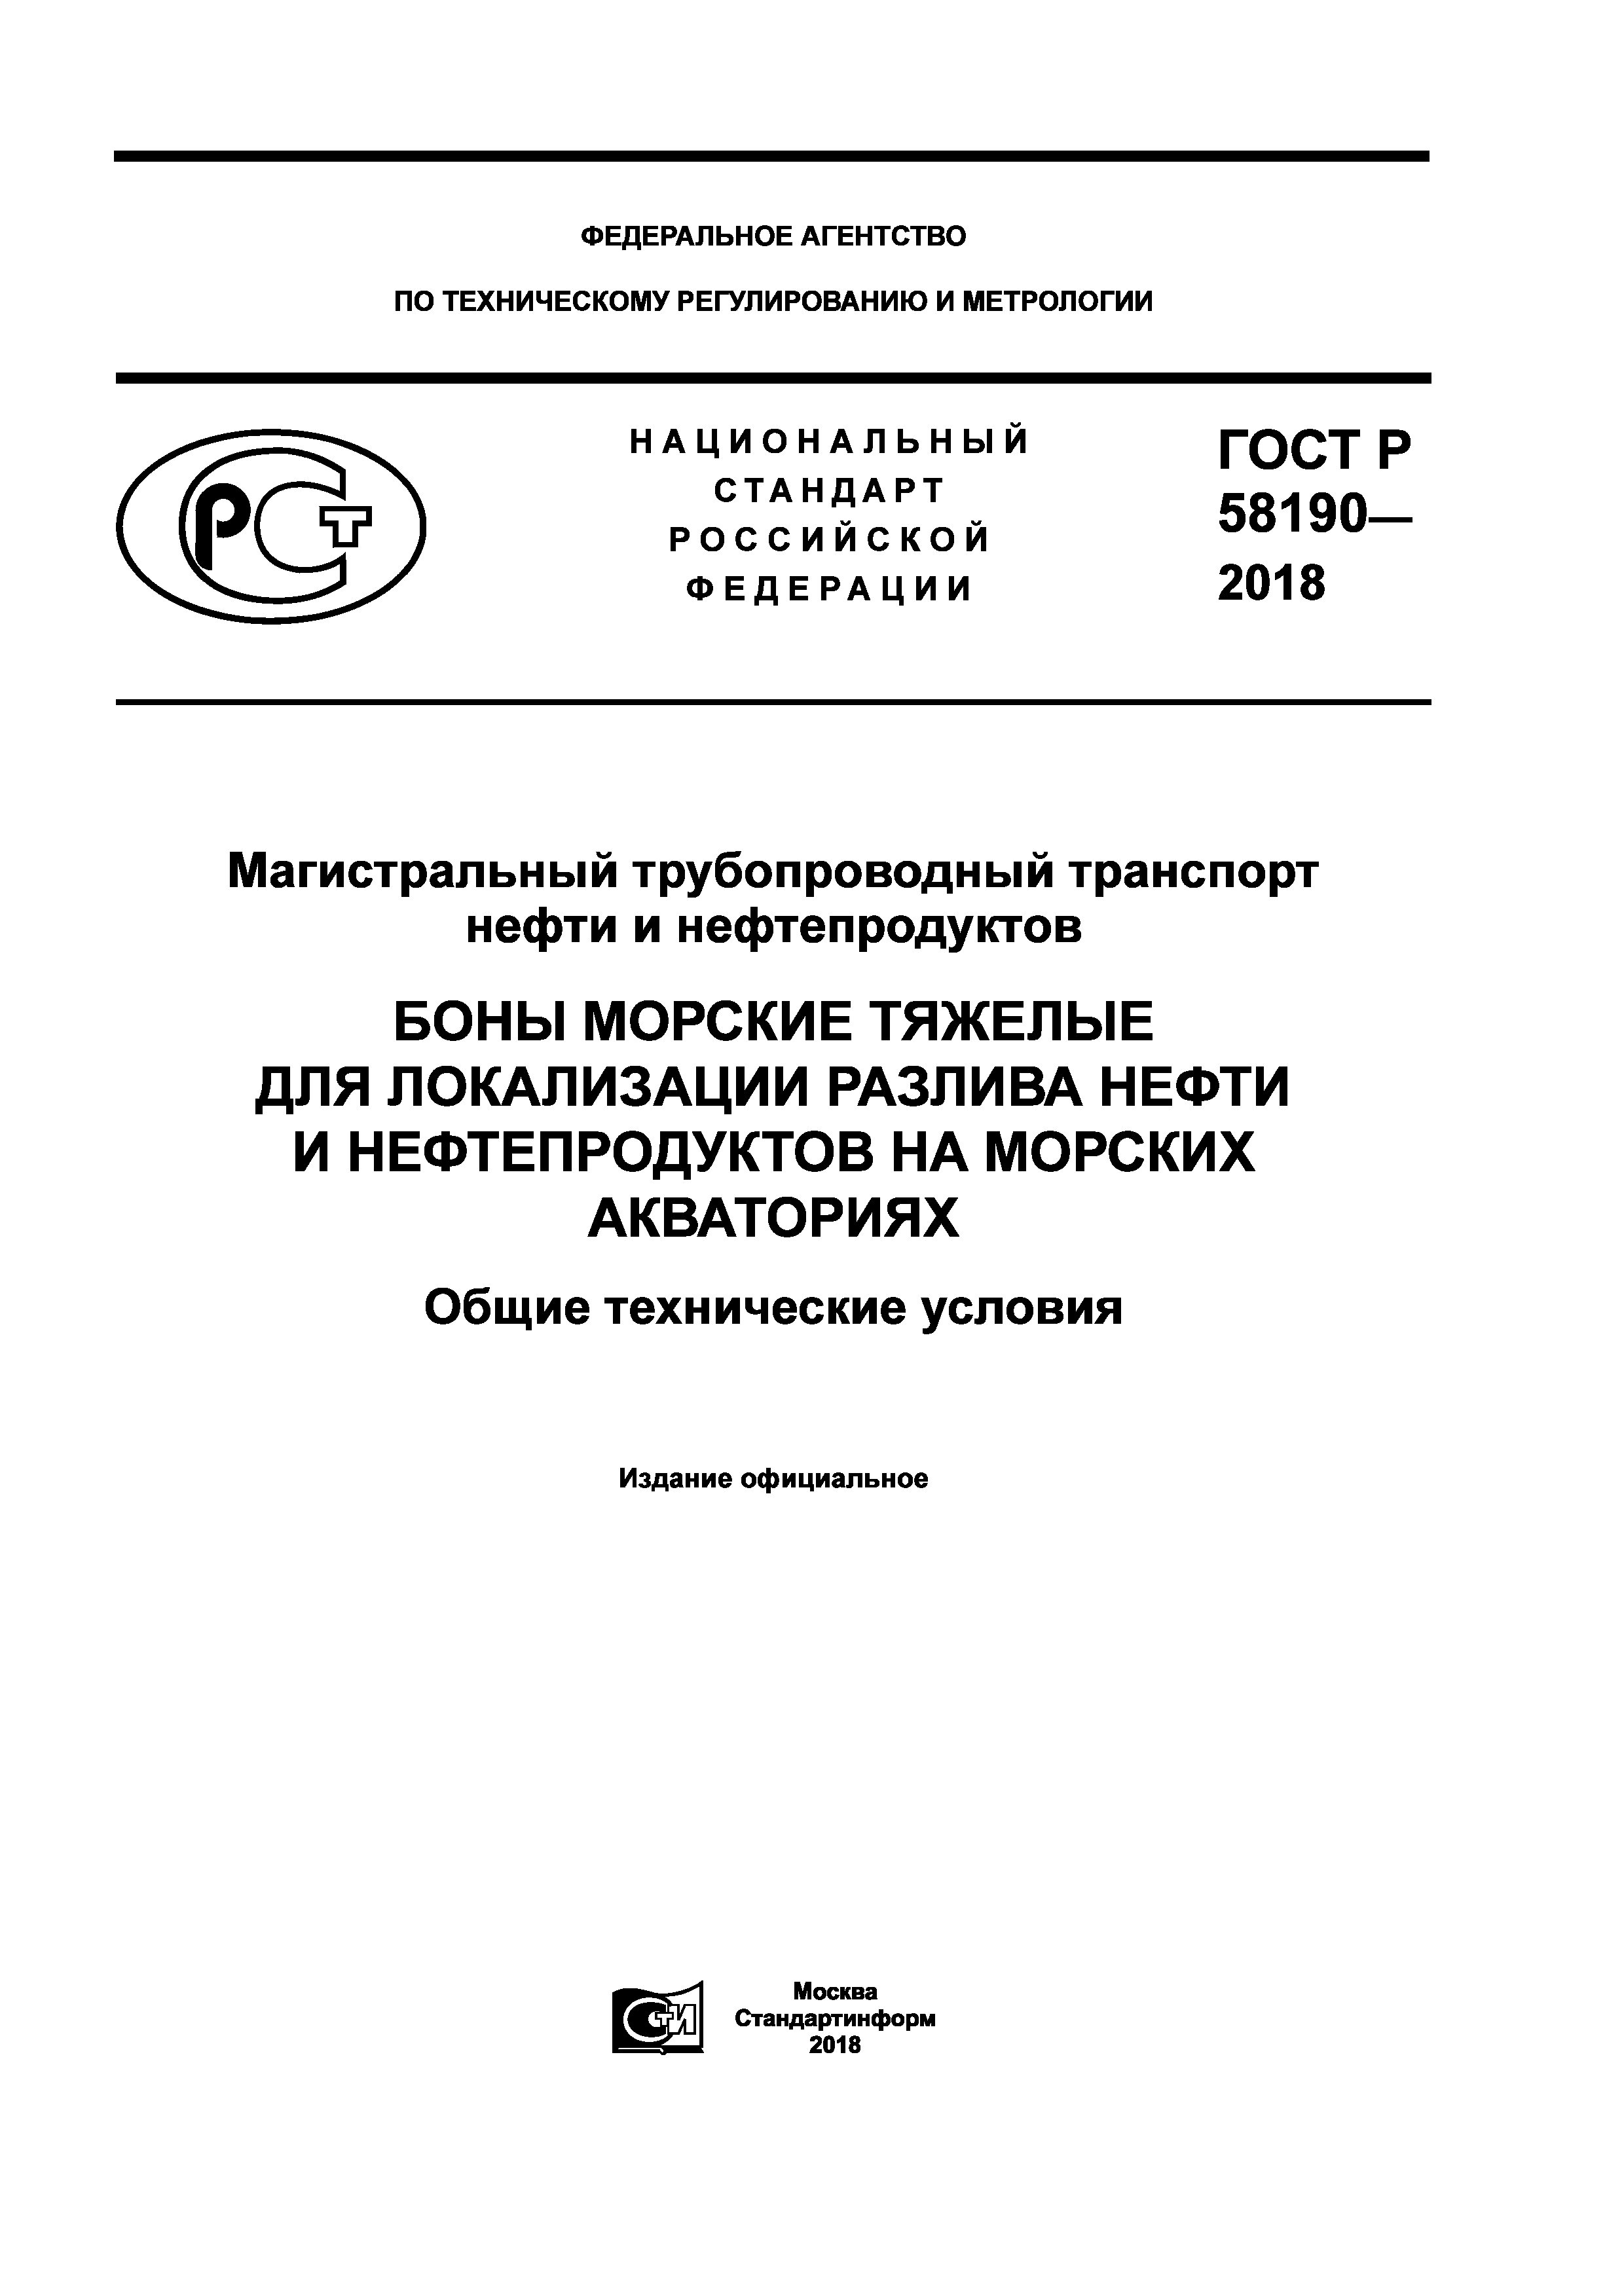 ГОСТ Р 58190-2018